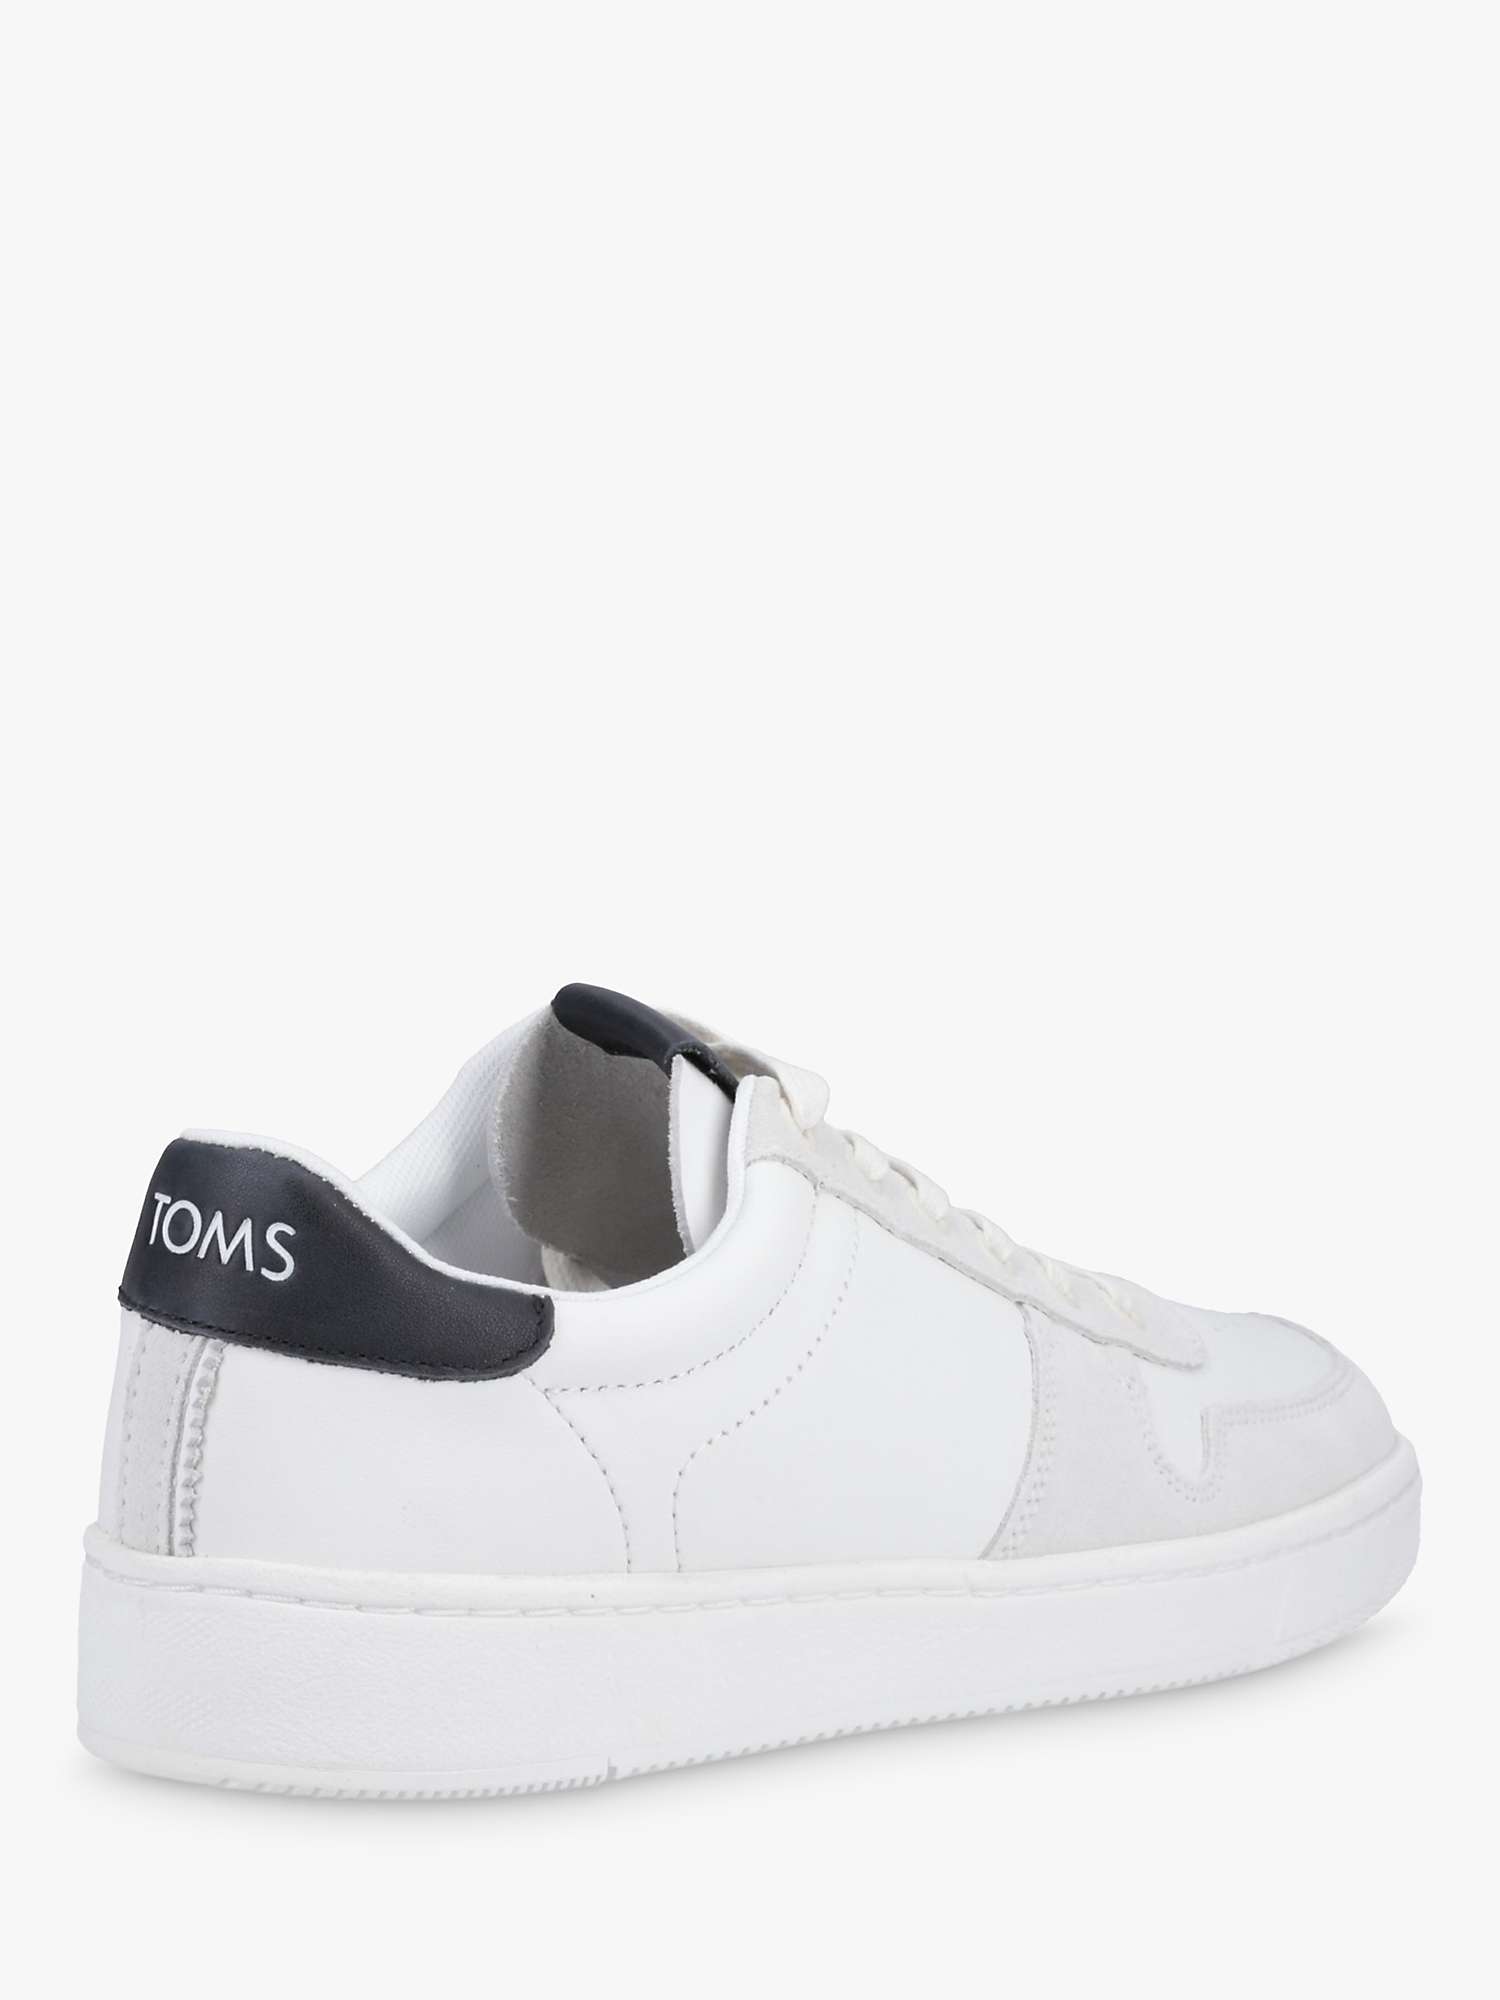 Buy Toms Trvl Lite Court Shoes, White Online at johnlewis.com